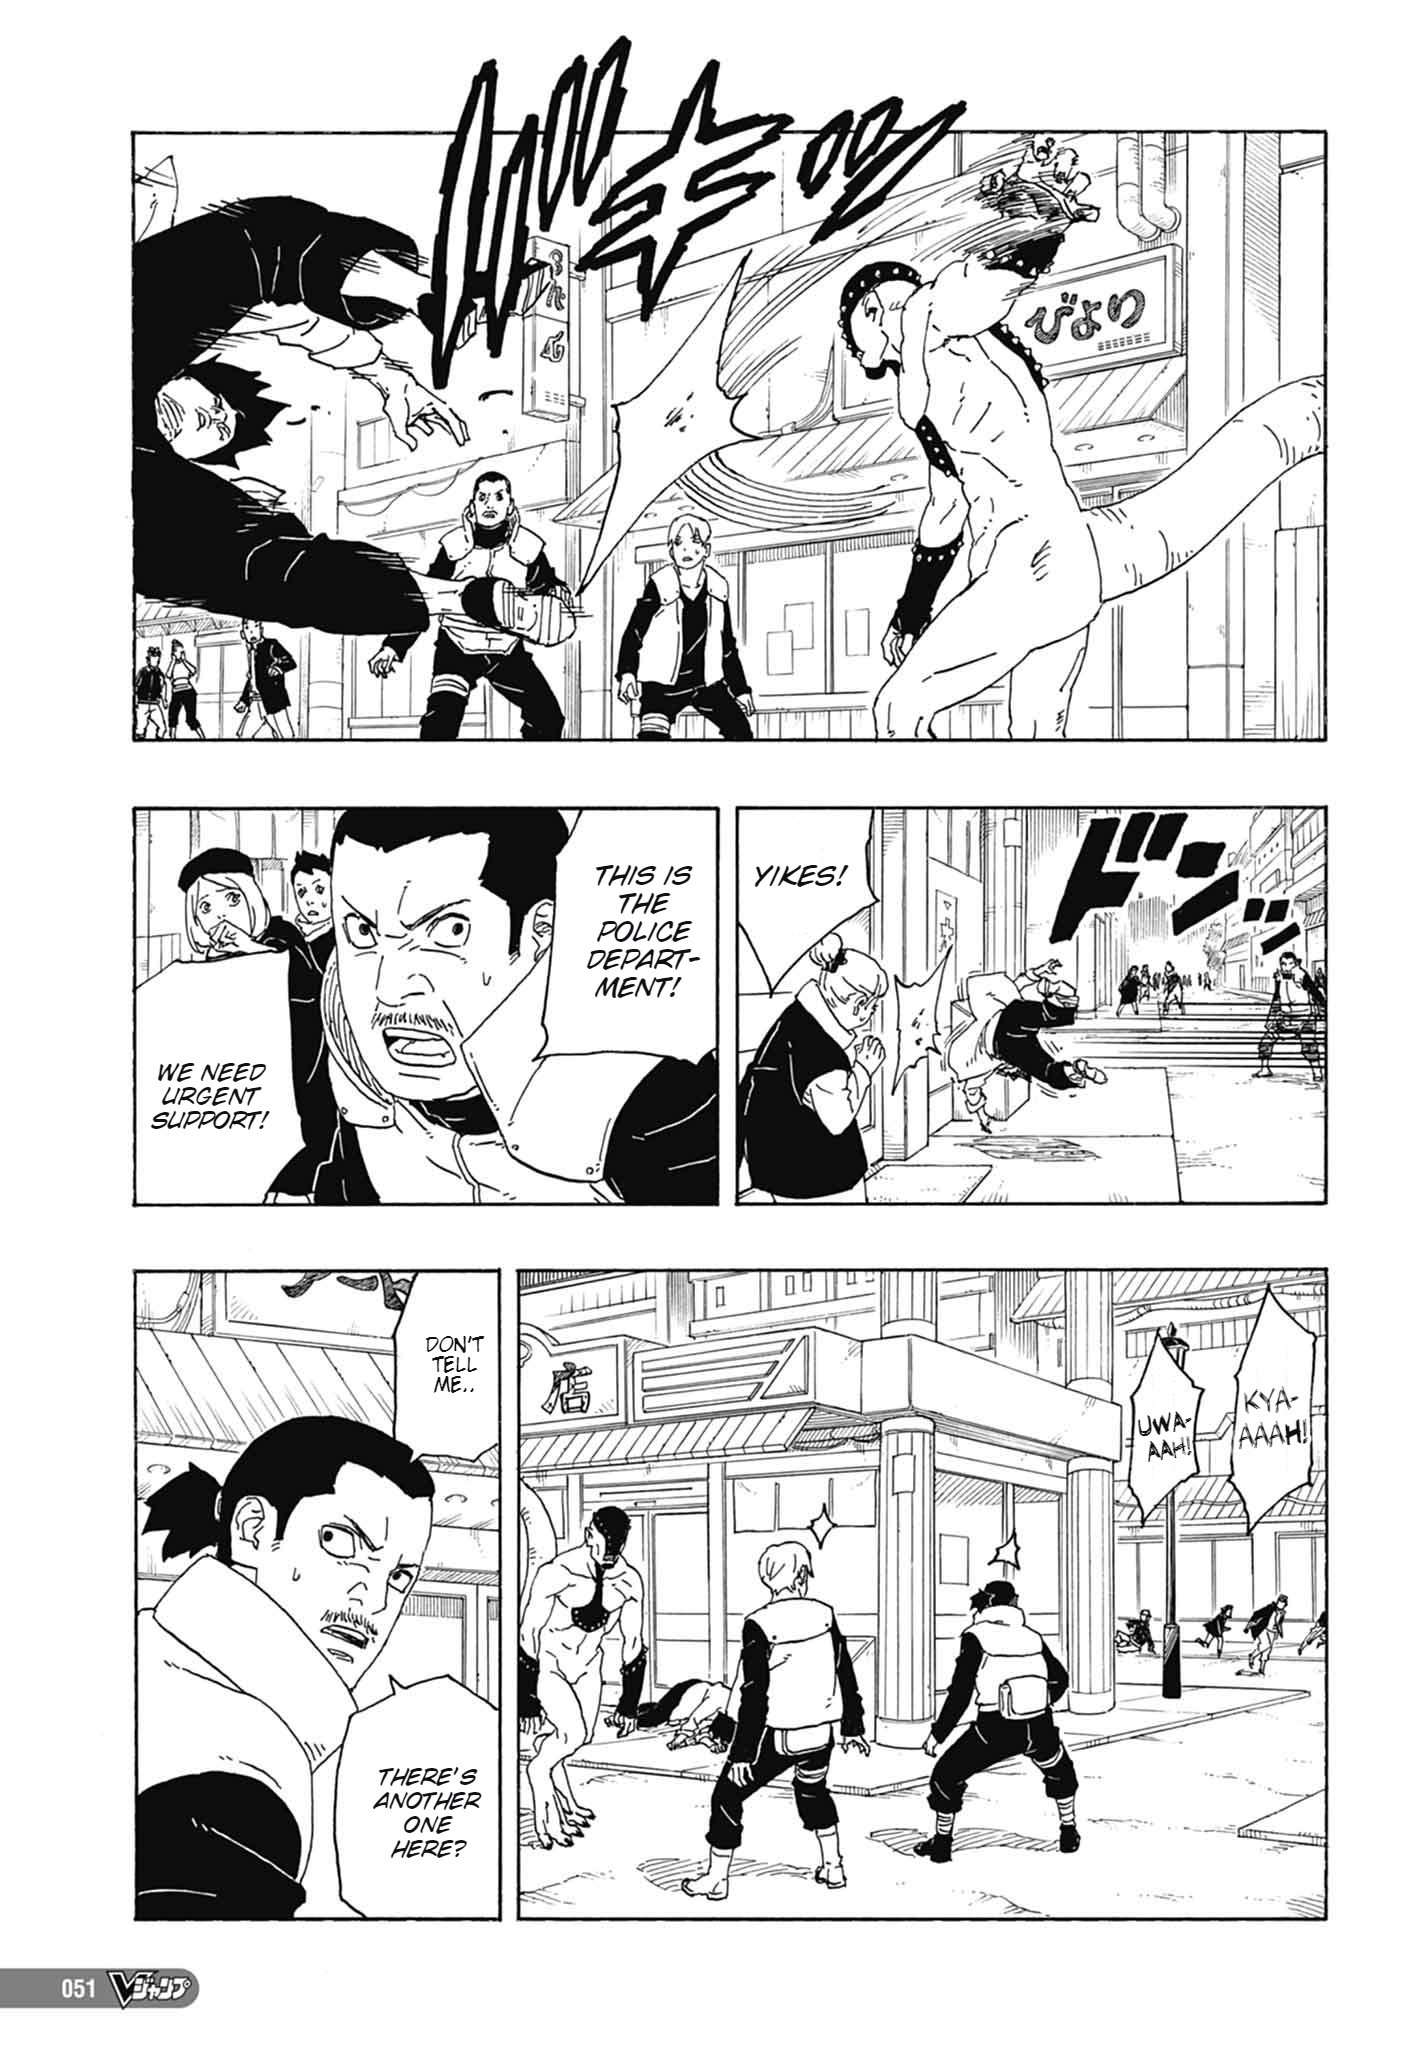 Read Boruto Manga - [English Version]